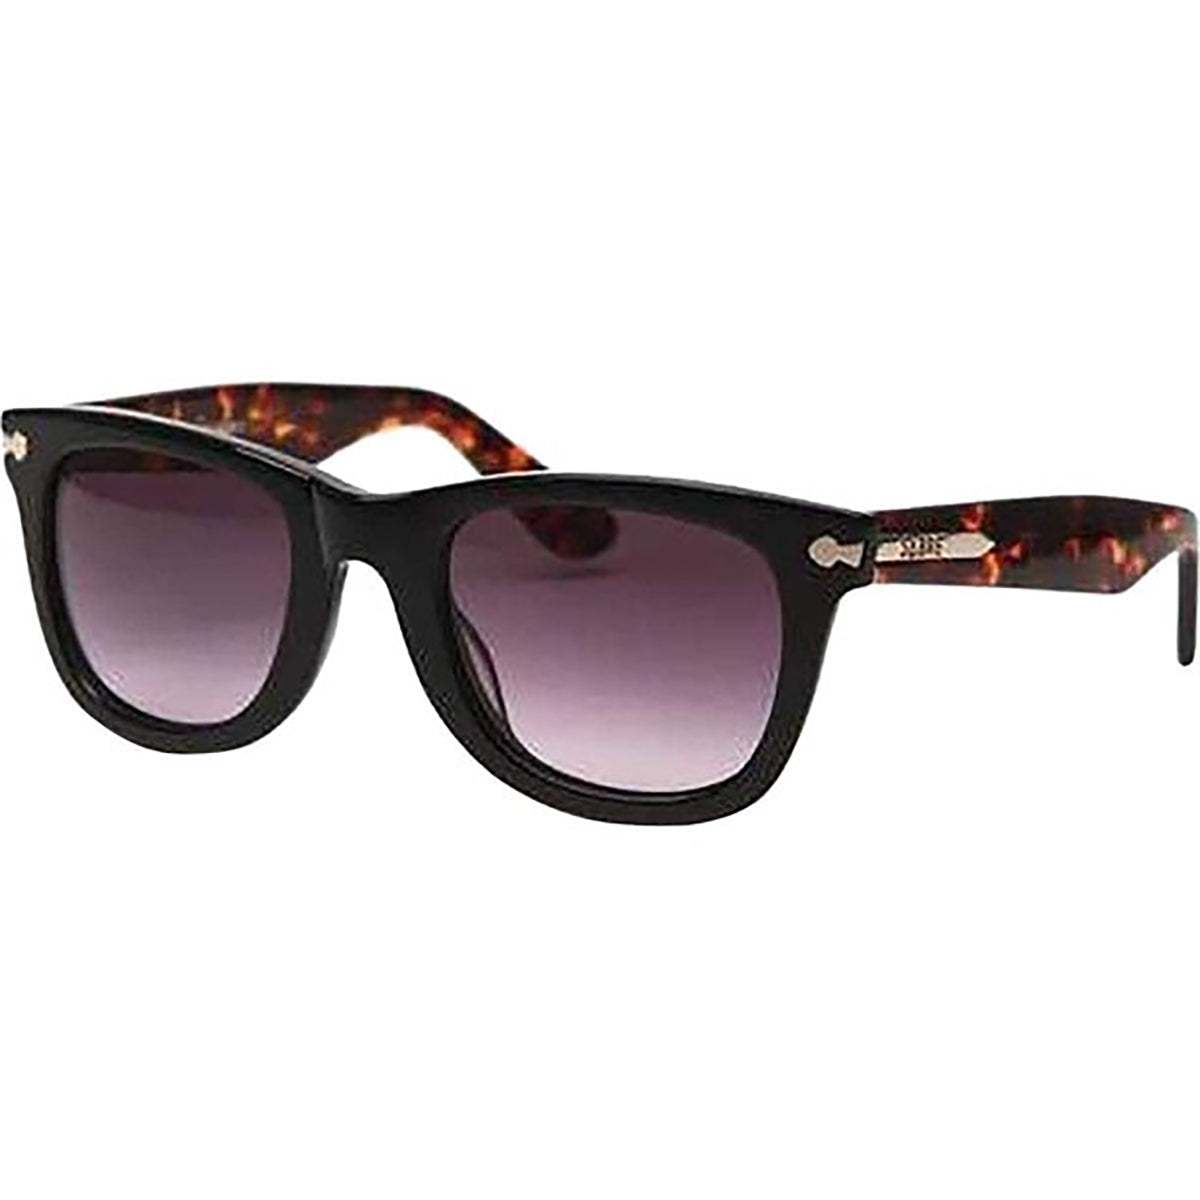 Sabre Detox Adult Lifestyle Sunglasses-SV100